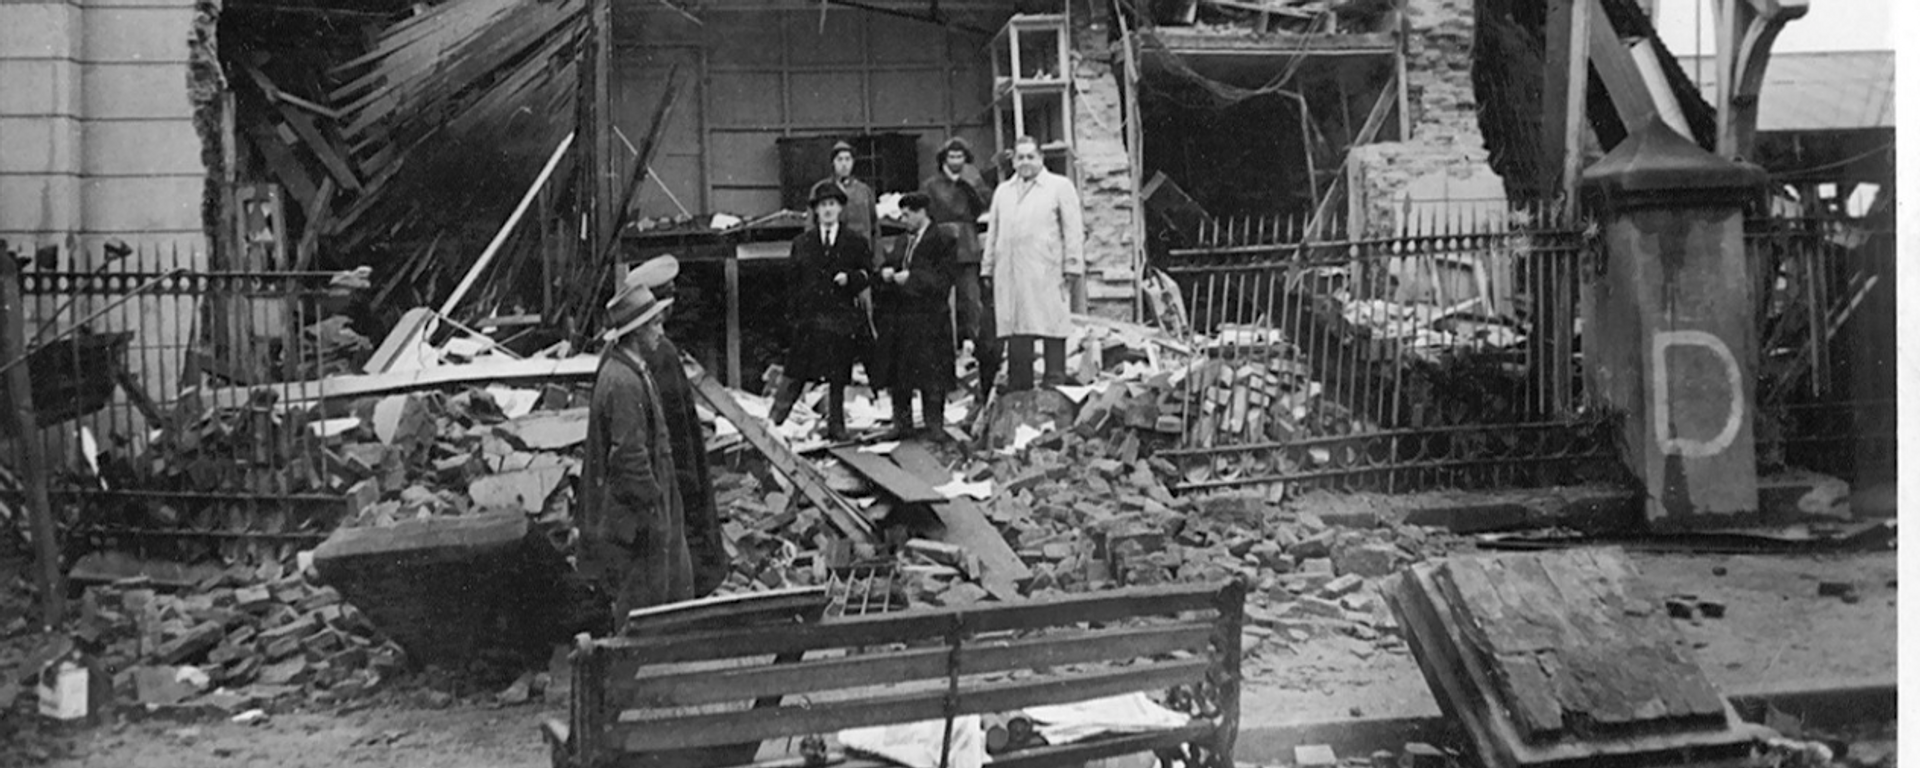 Terremoto de Valdivia, al sur de Chile, en 1960 - Sputnik Mundo, 1920, 22.05.2020